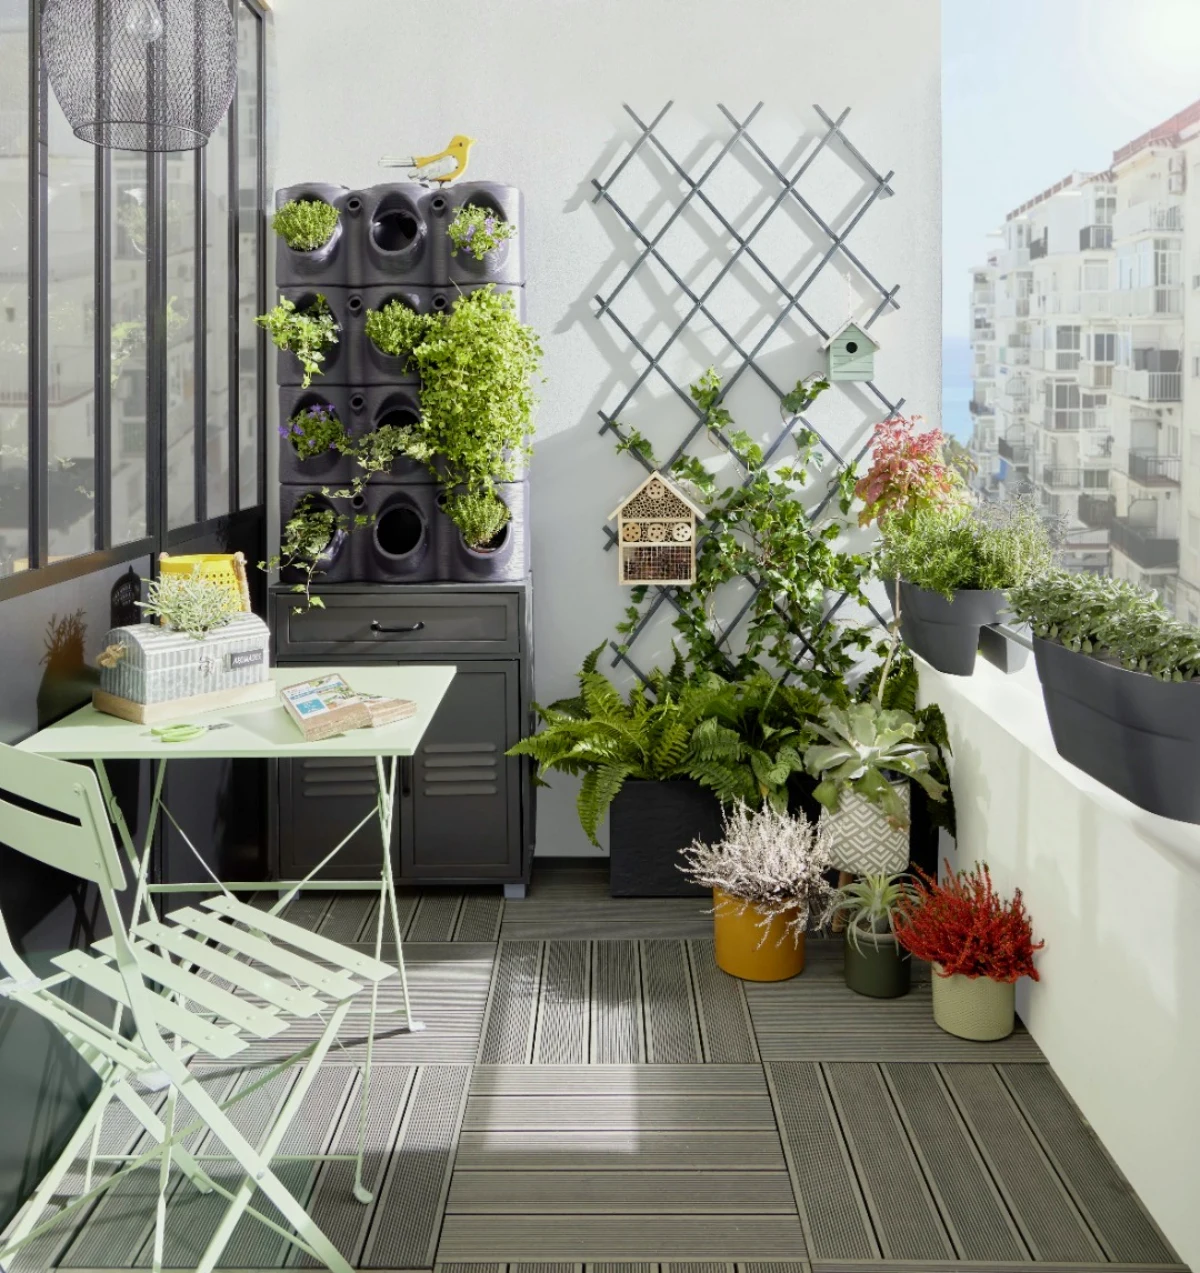 exemple de balcon avec desplantes vertes en pot